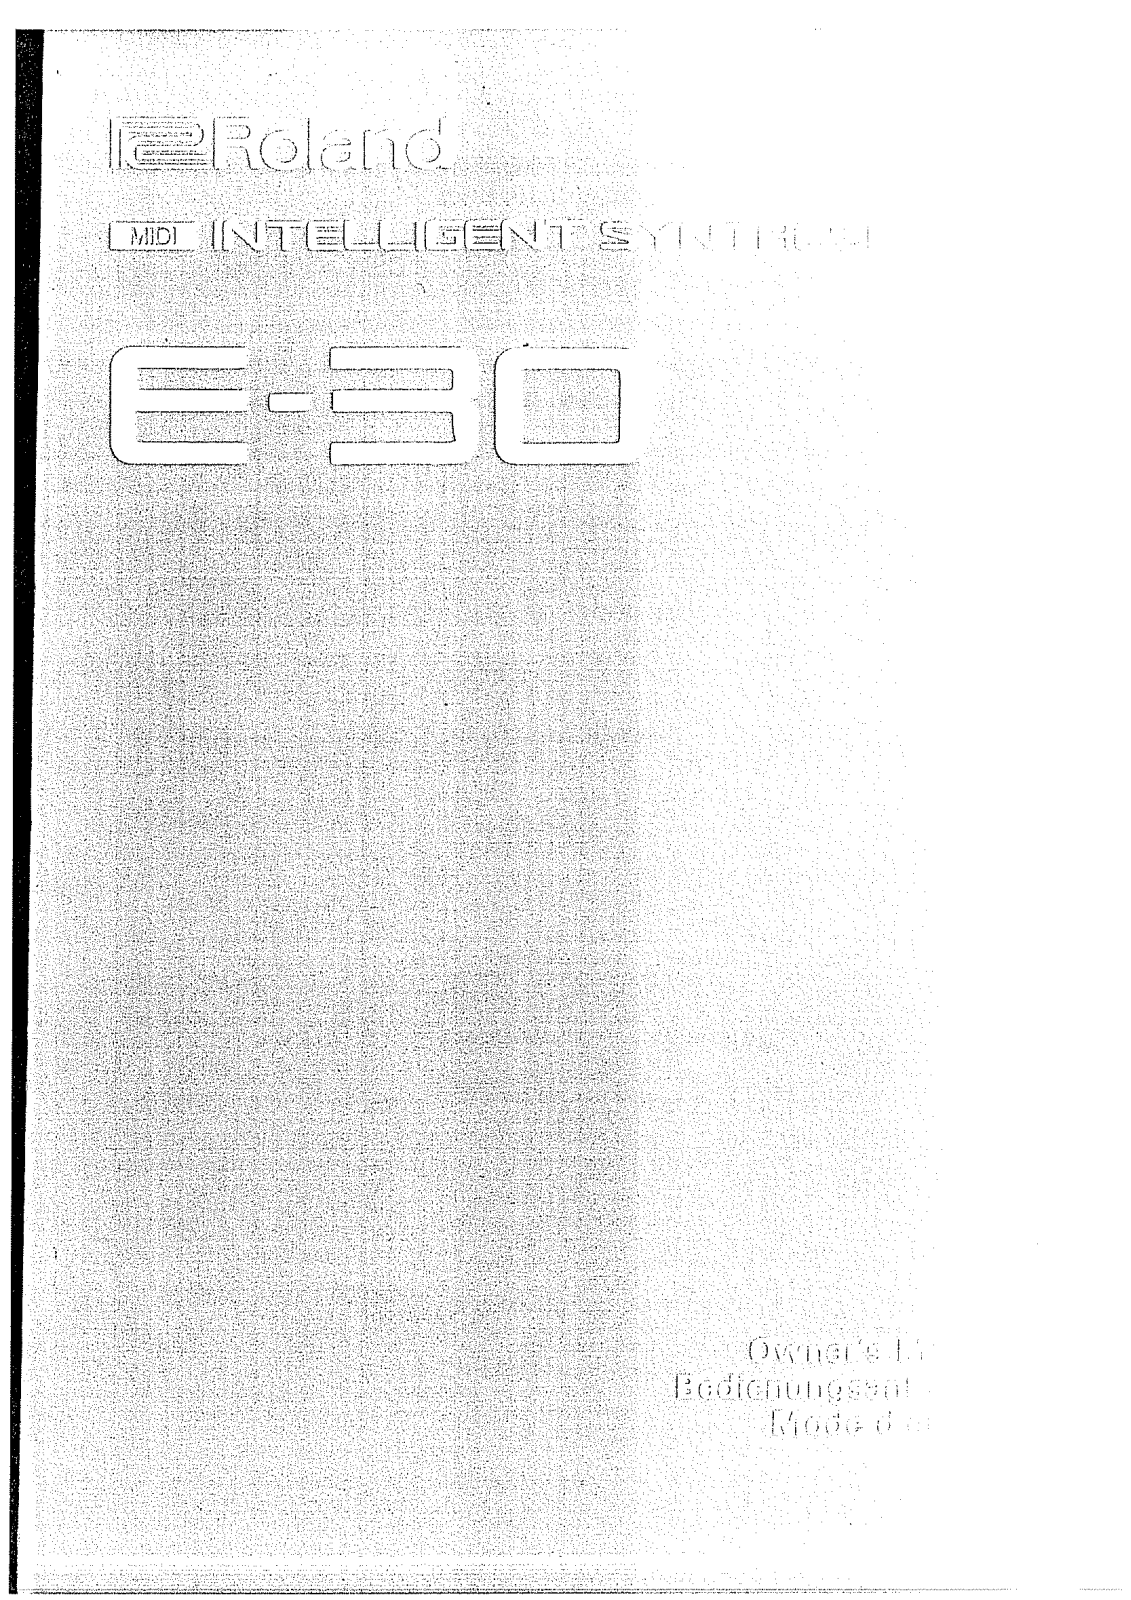 Roland E-30 Manual